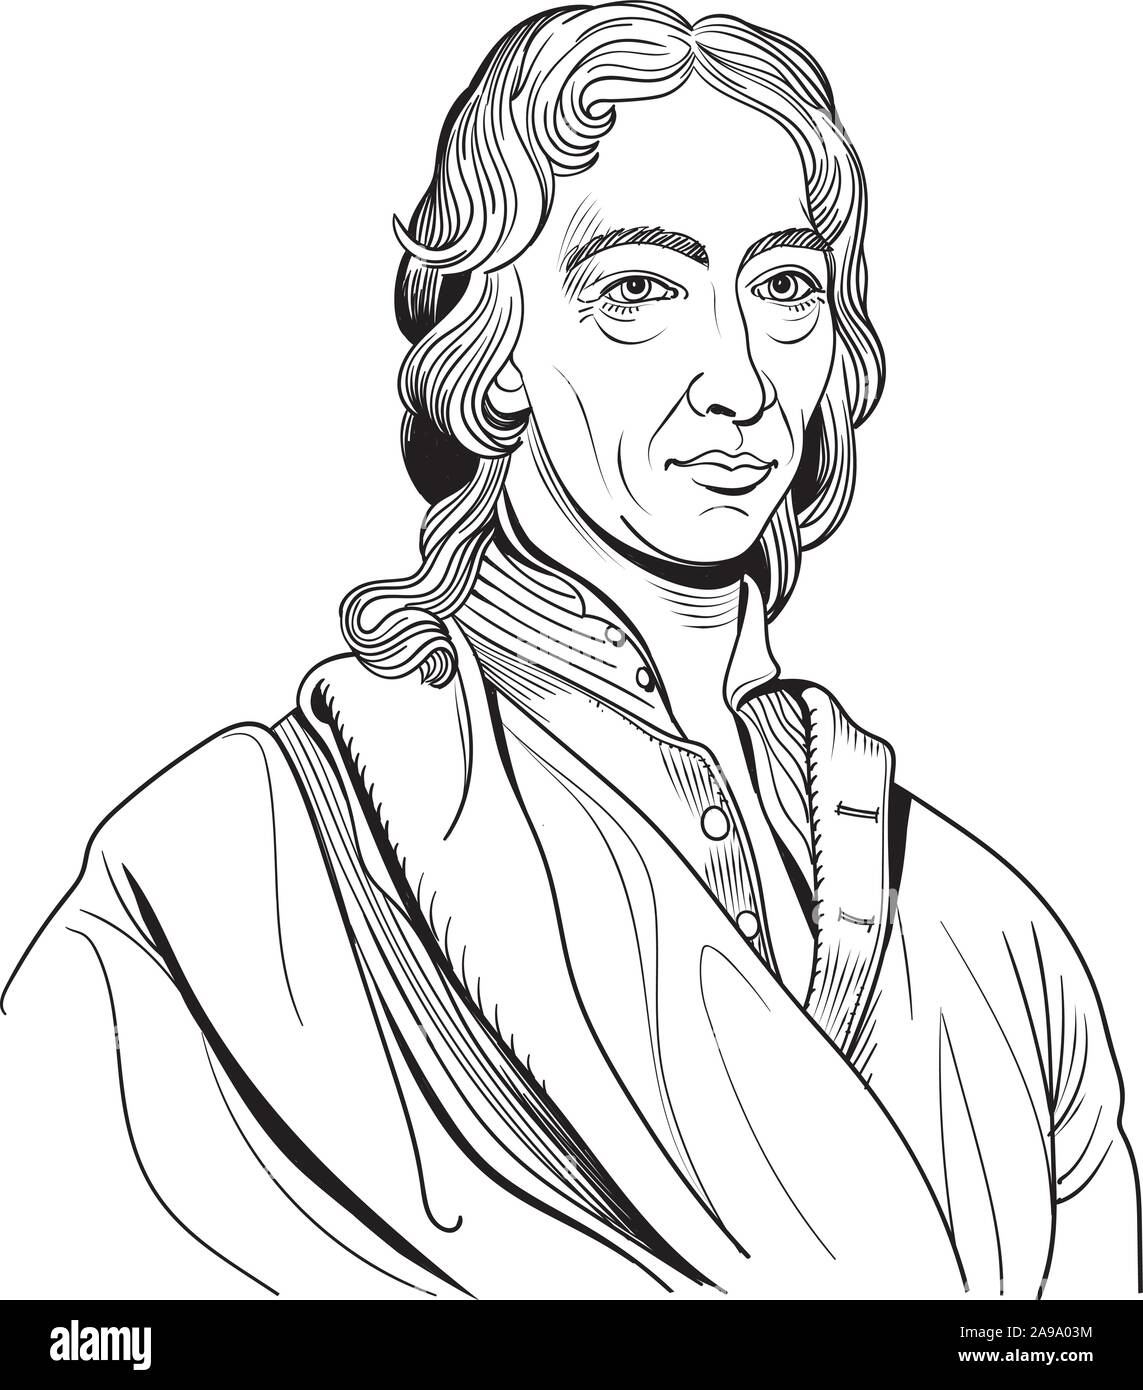 Robert Boyle cartoon portrait, he was philosopher, chemist, physicist and inventor. Stock Vector